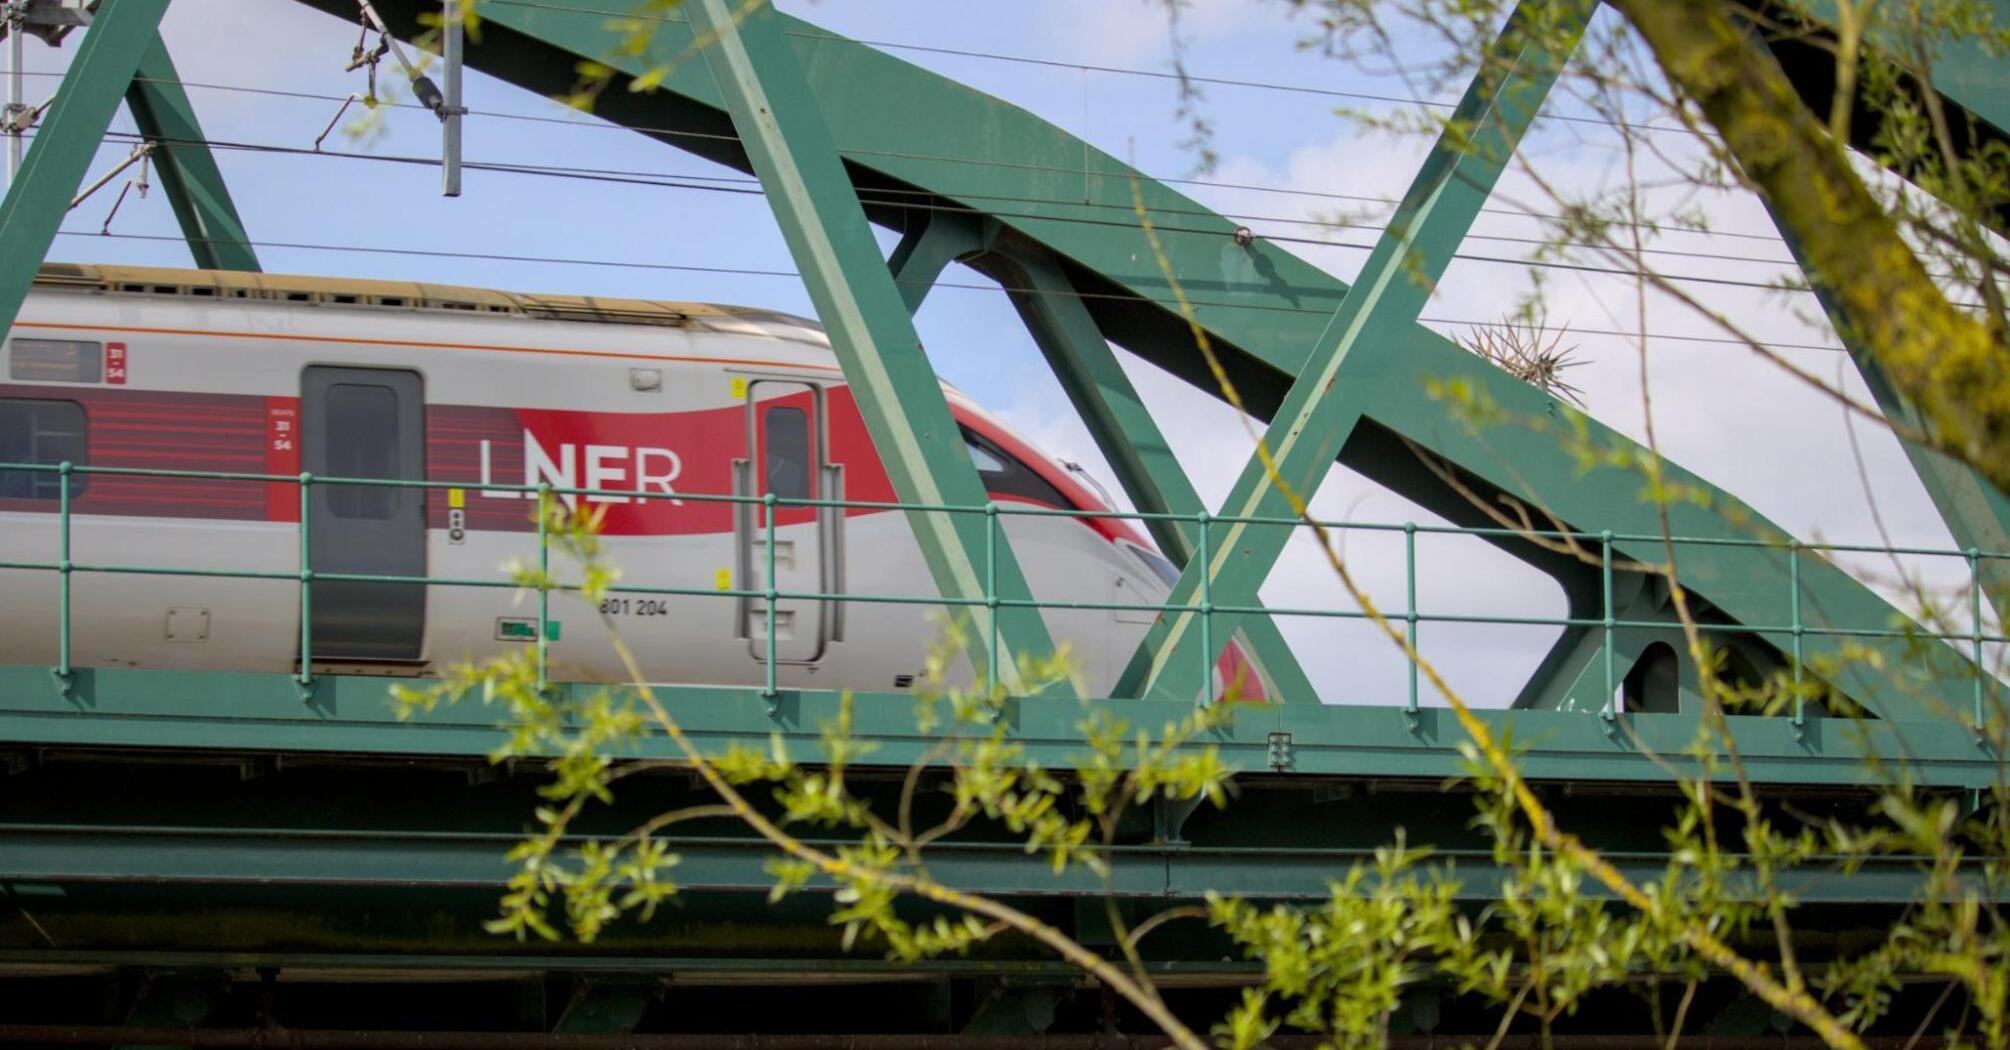 LNER train on the bridge